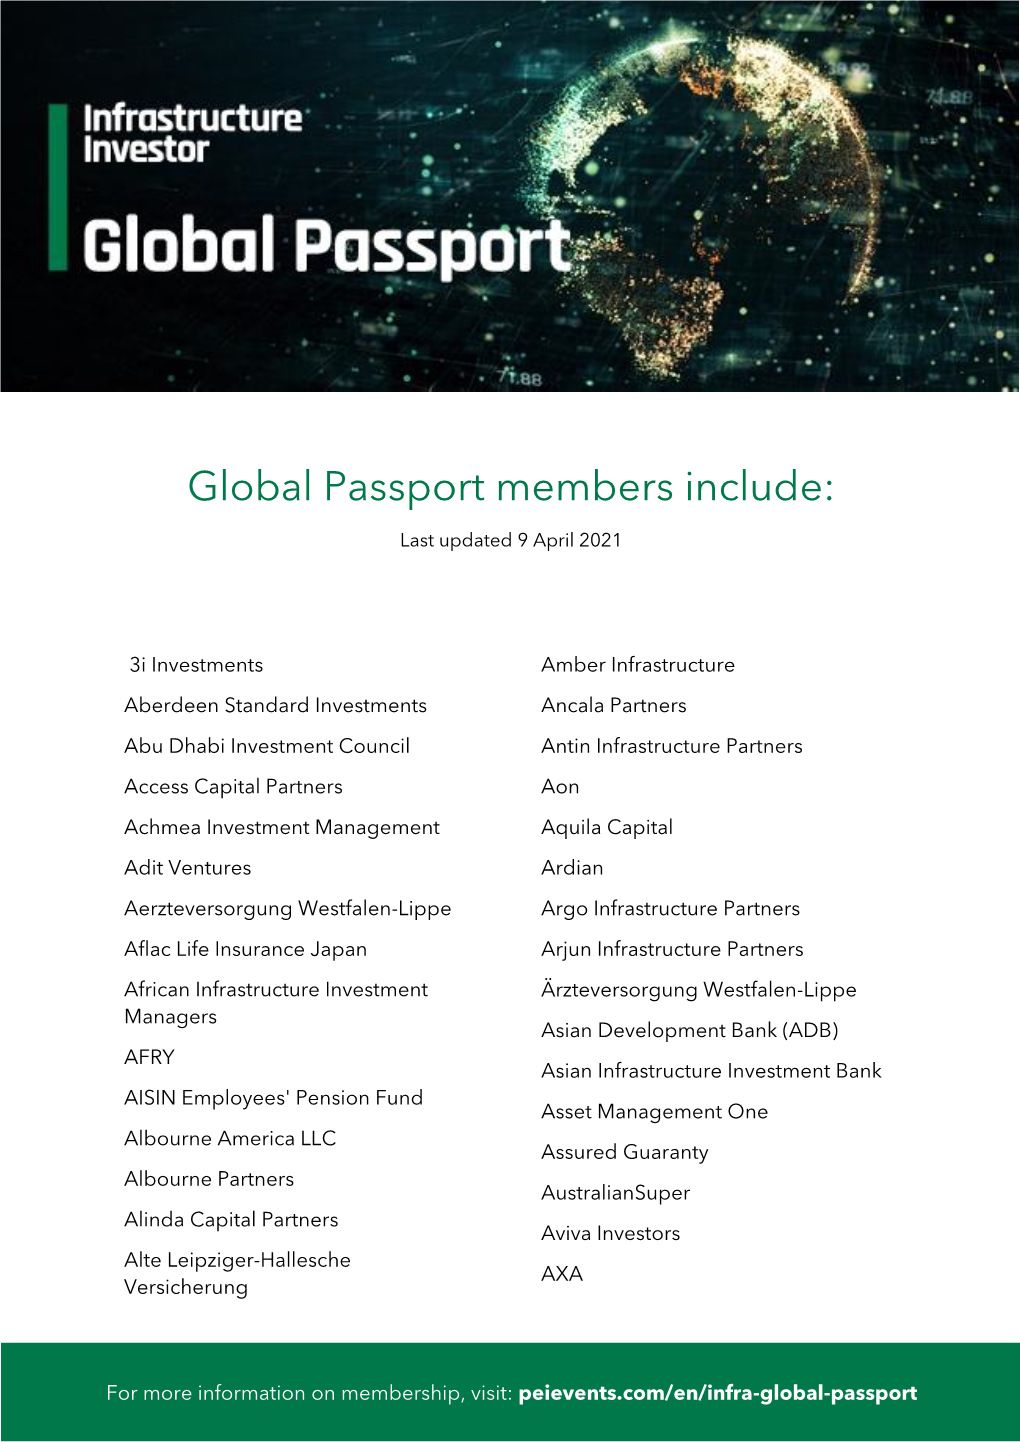 Global Passport Members Include